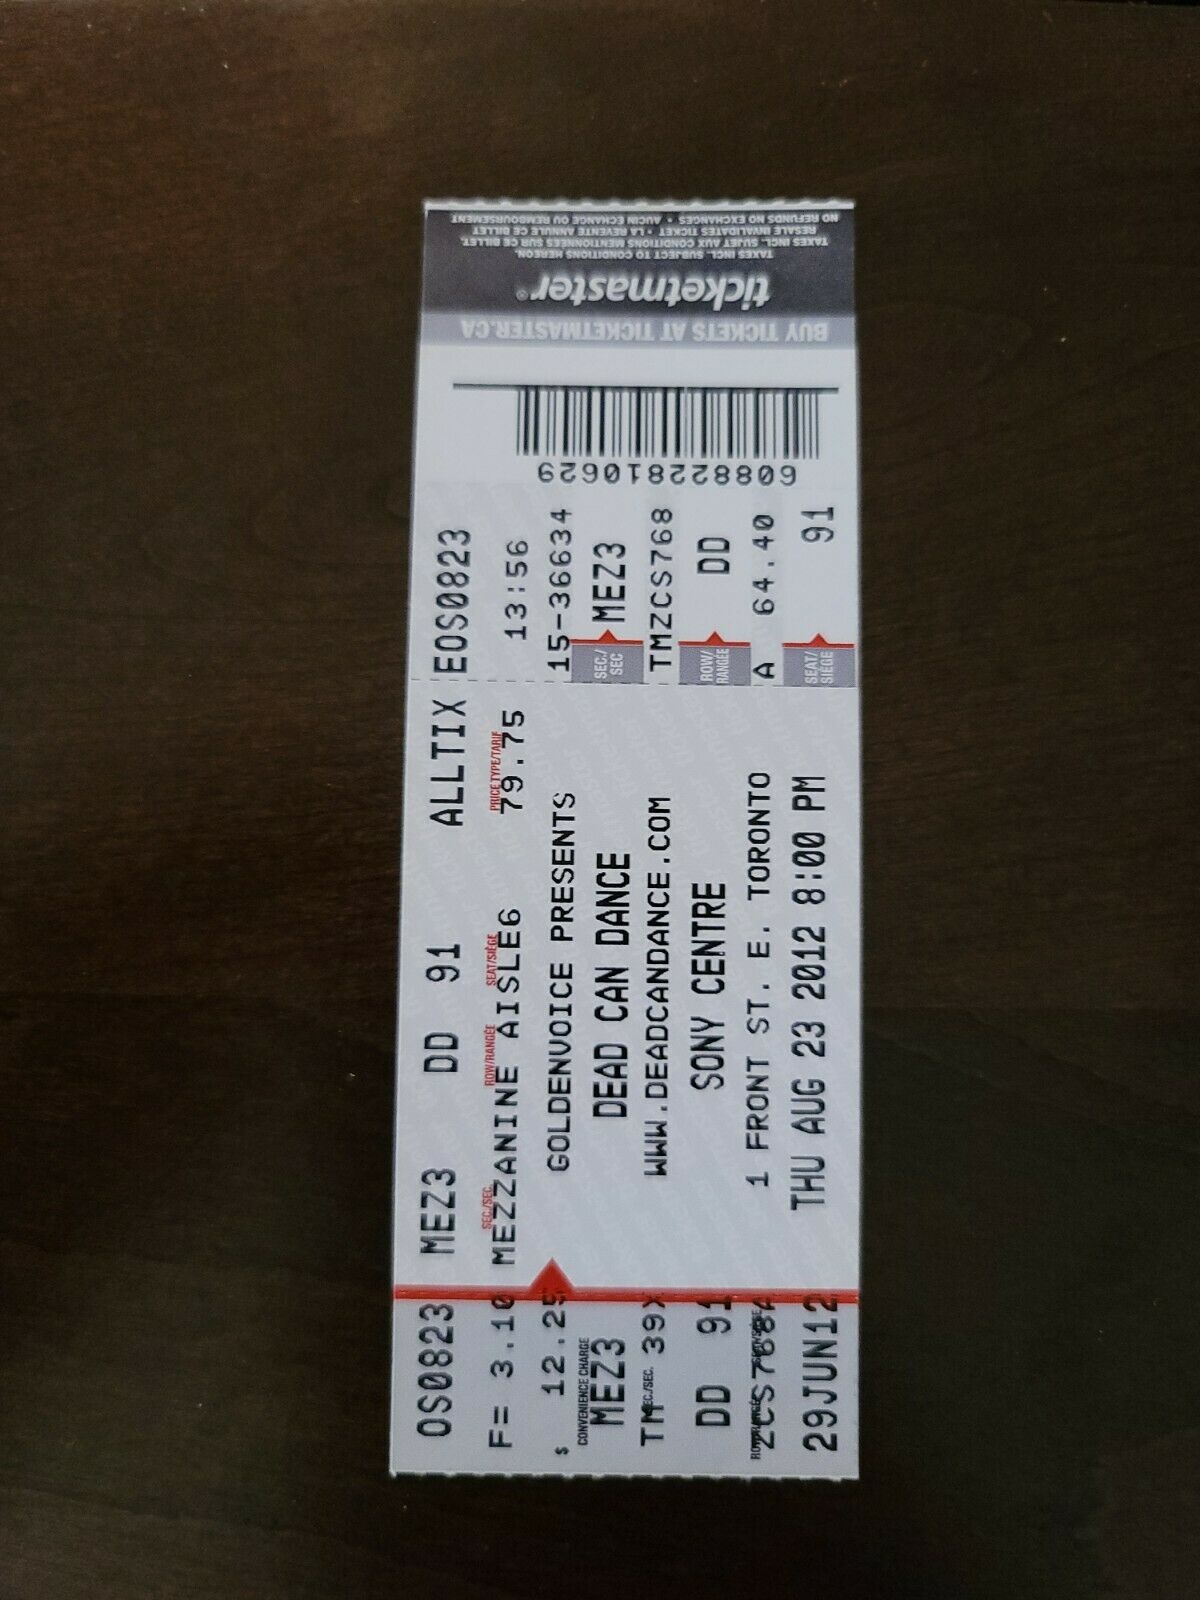 Dead Can Dance 2012, Toronto Sony Centre Original Concert Ticket Stub